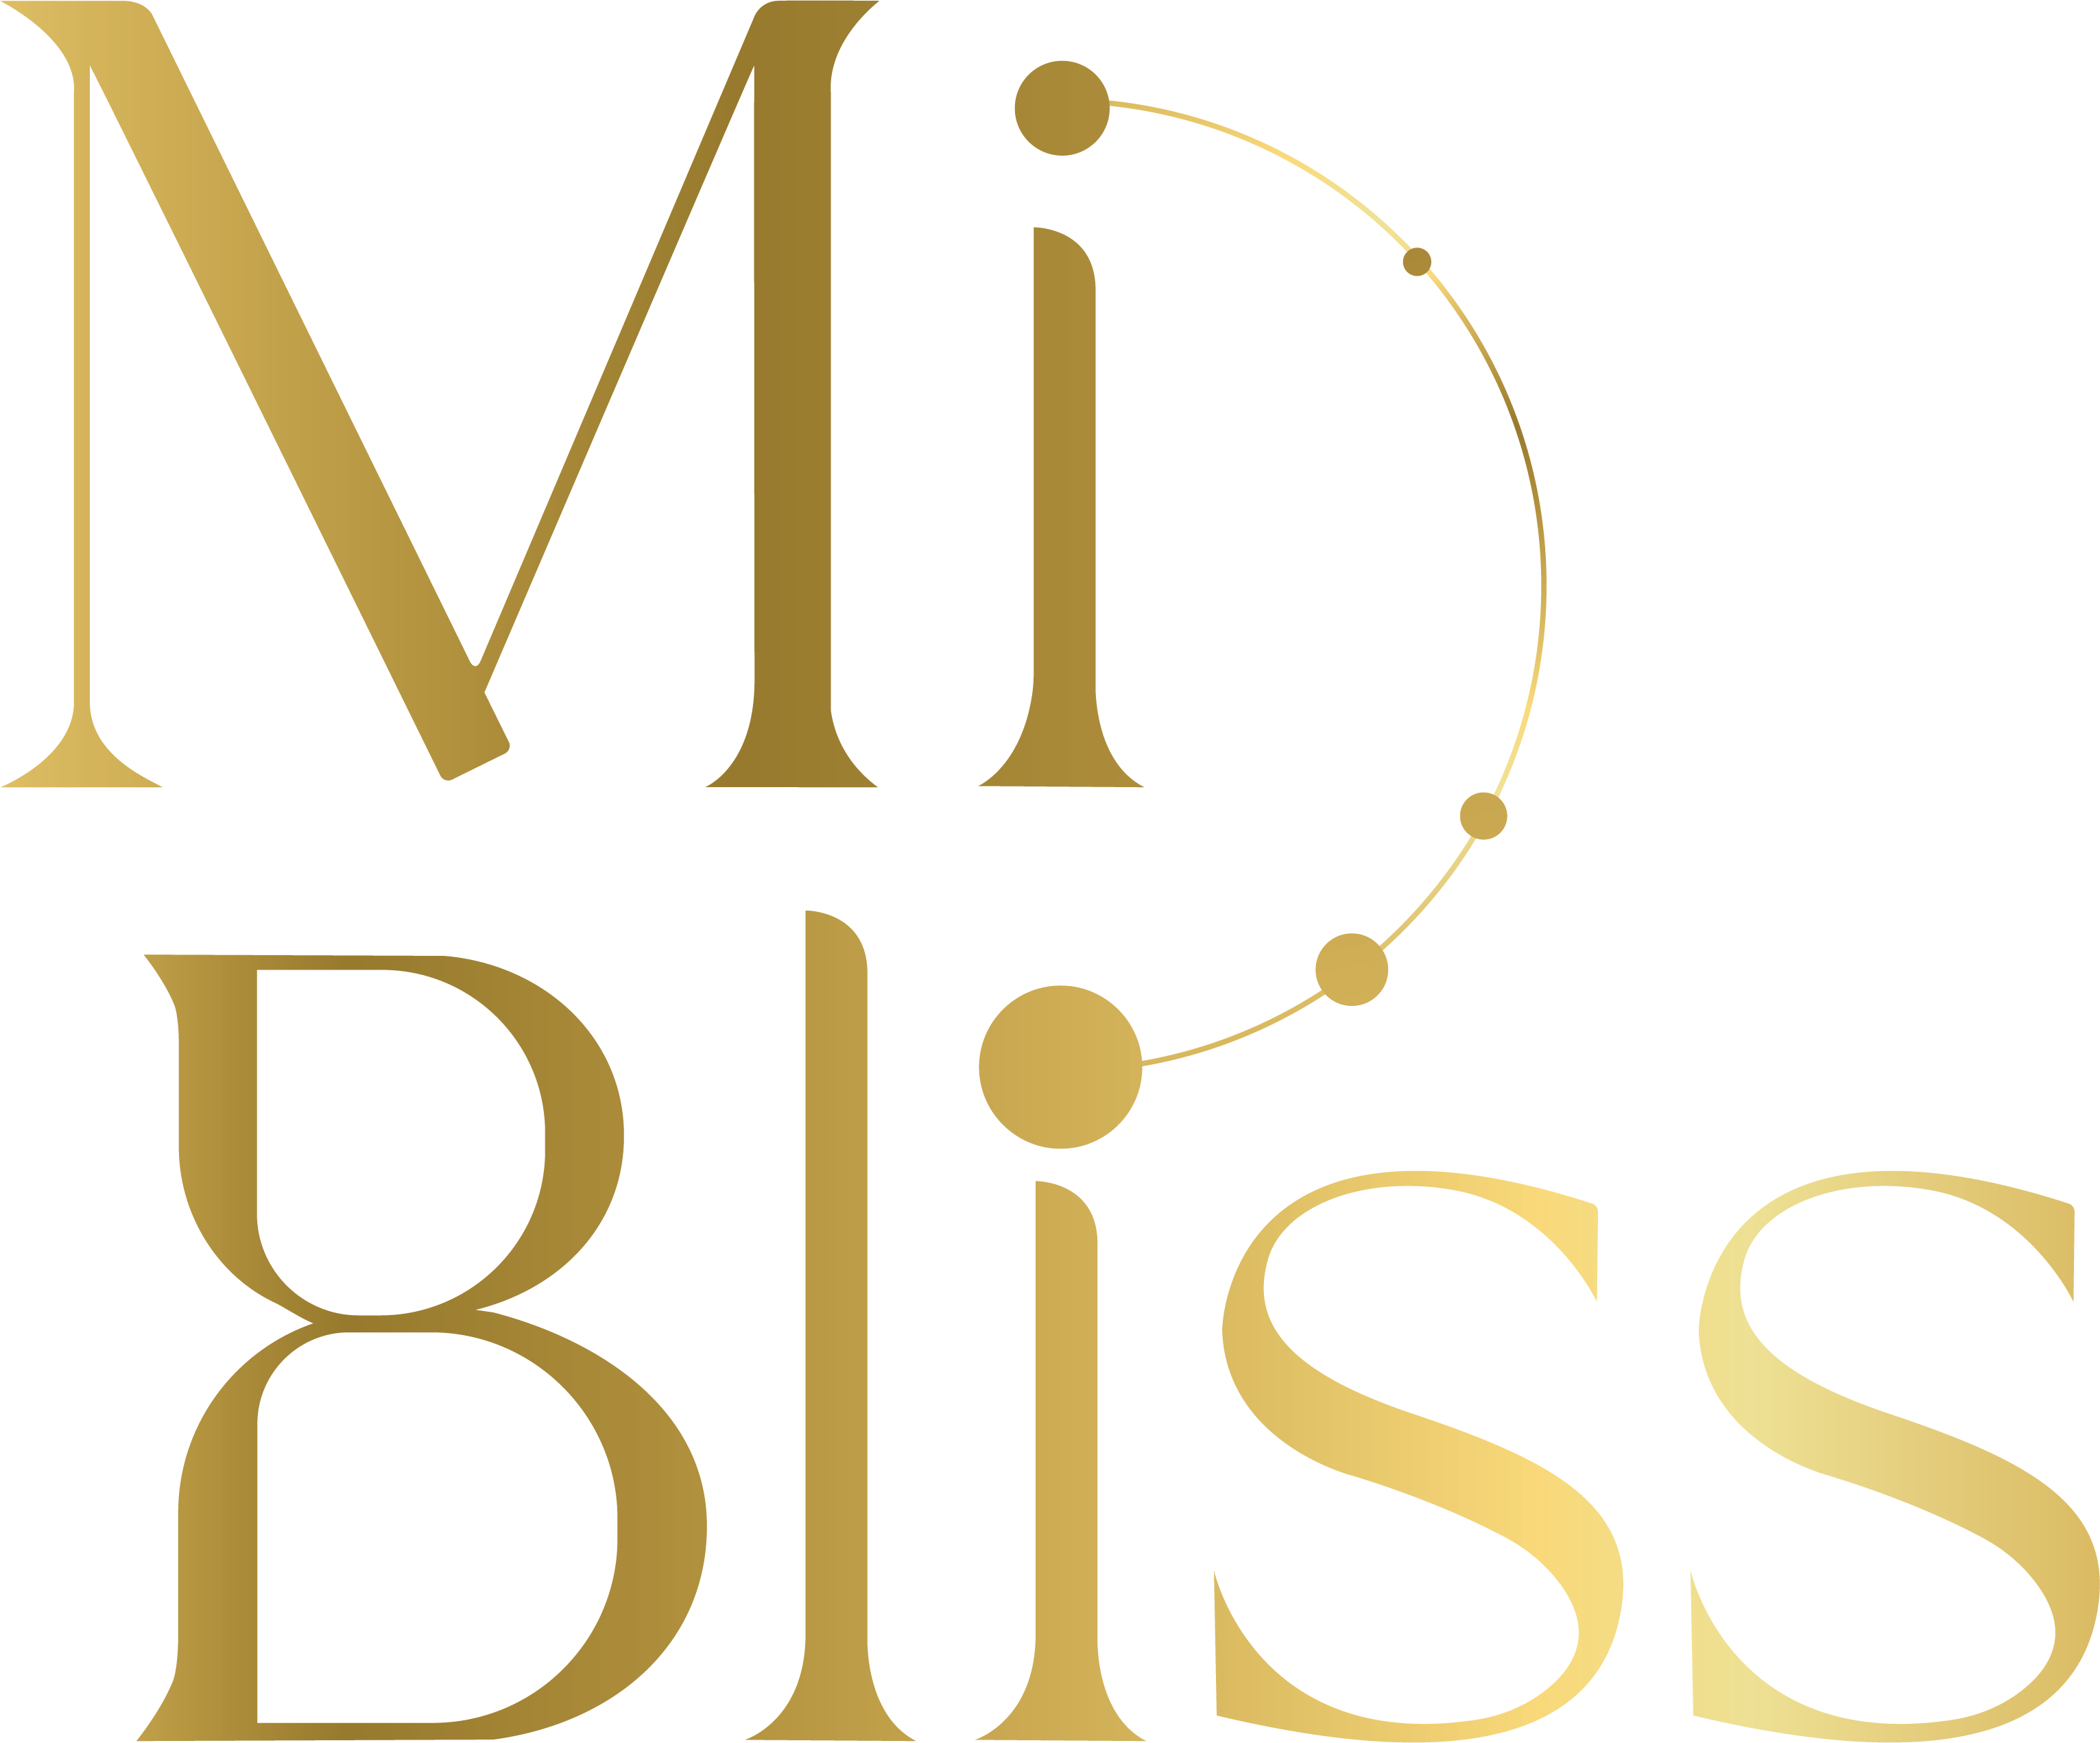 bliss logo - Arista Hotel